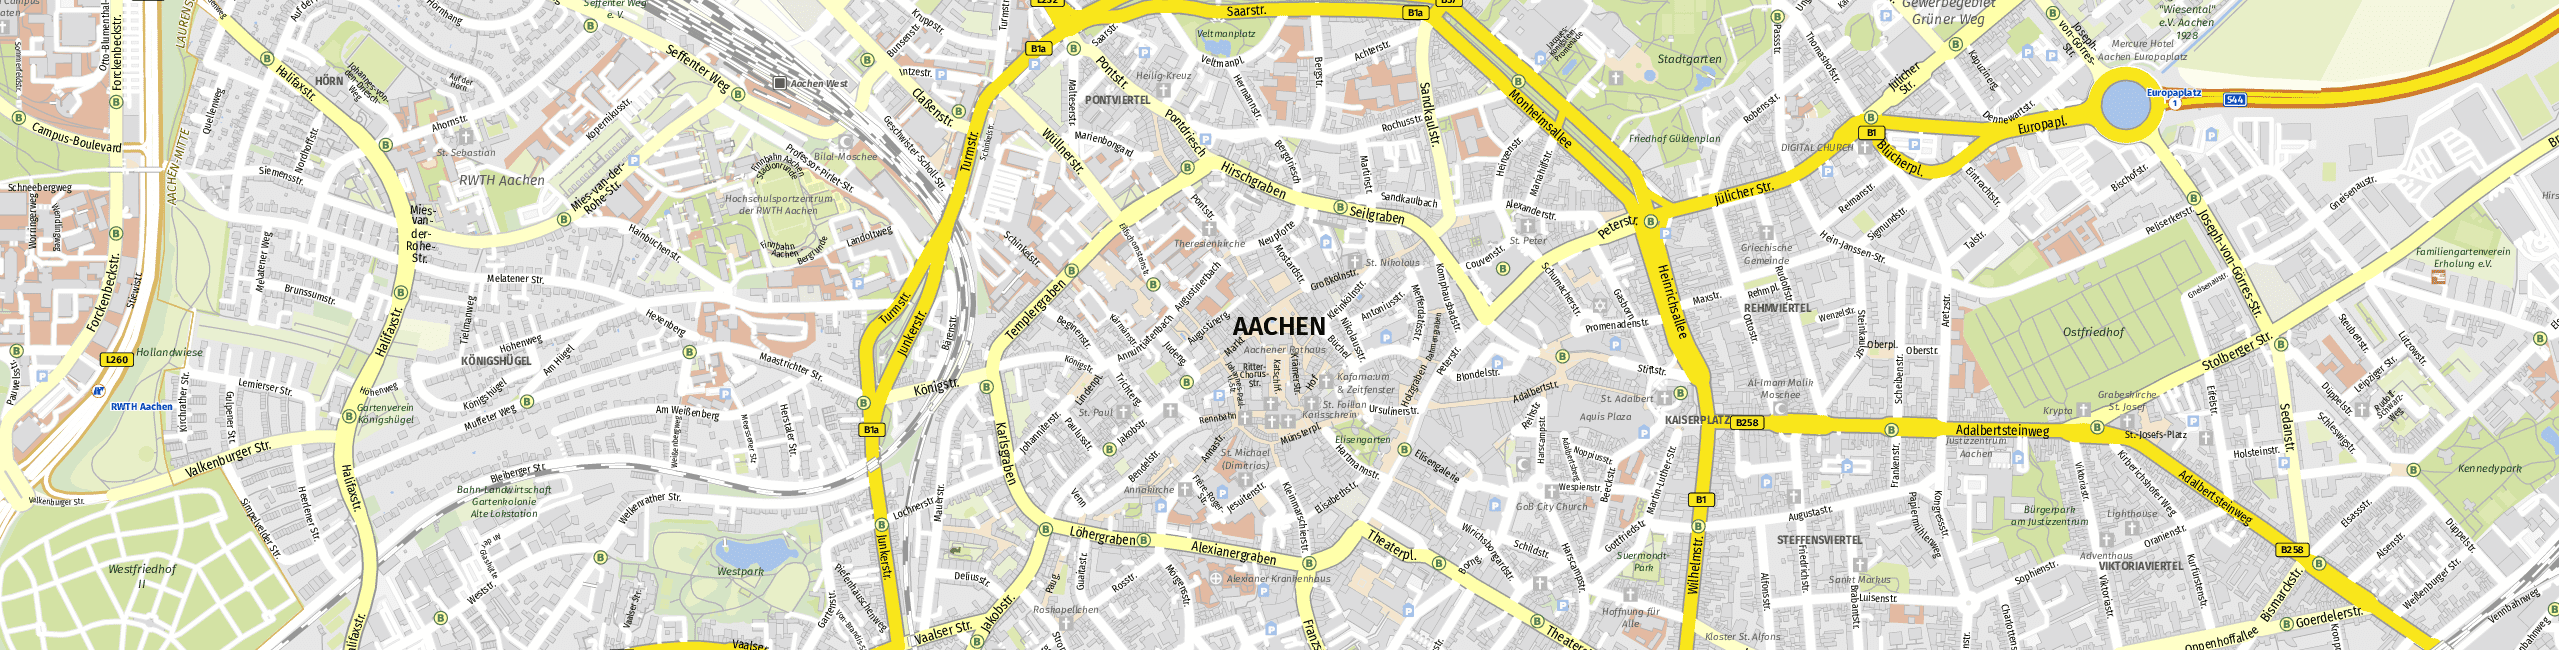 Stadtplan Aachen zum Downloaden.